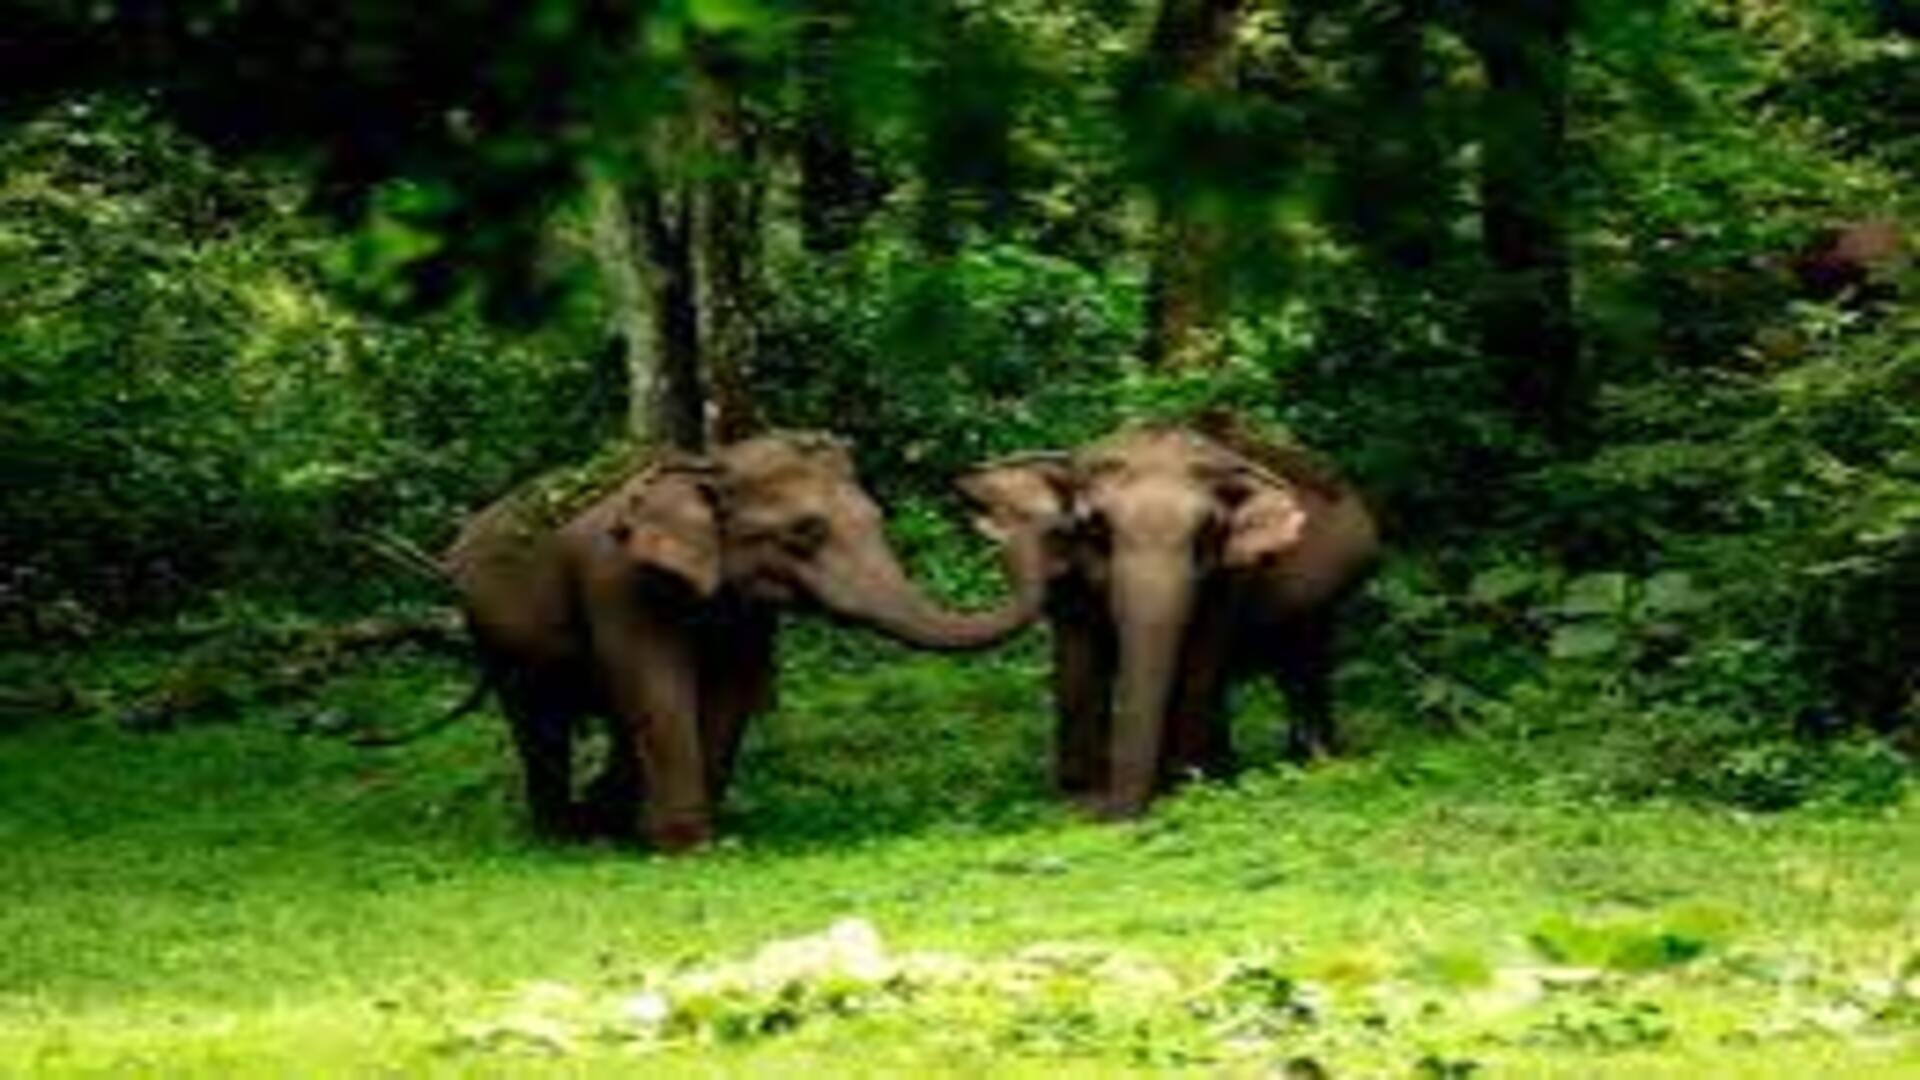 Kerala: Wild Elephants Claim a life, political parties start protest